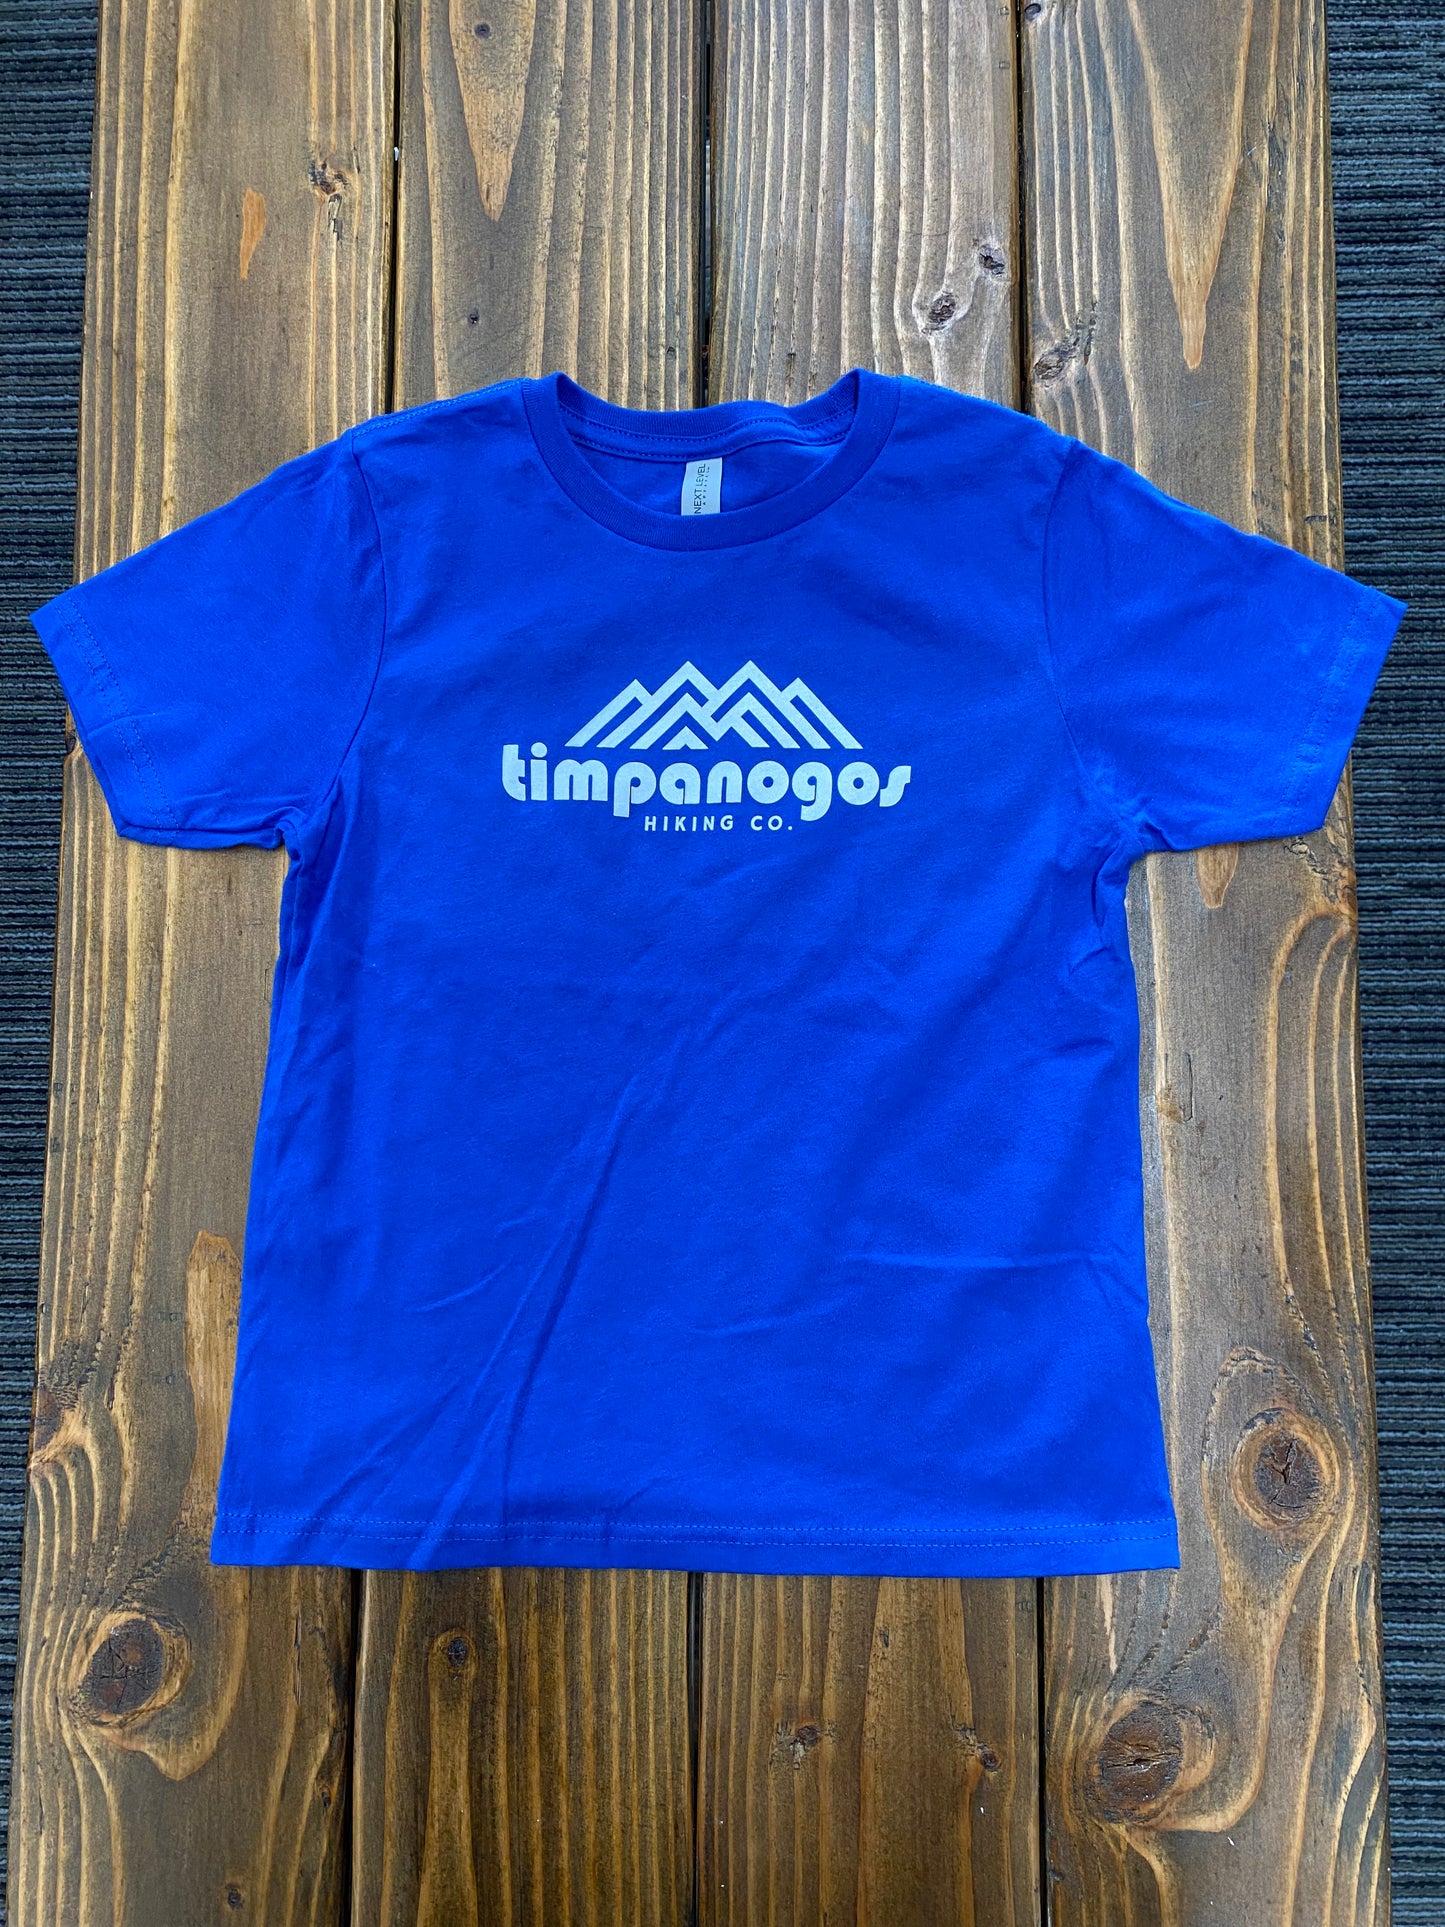 Timpanogos Hiking Co.(official) - Kids' T-shirt